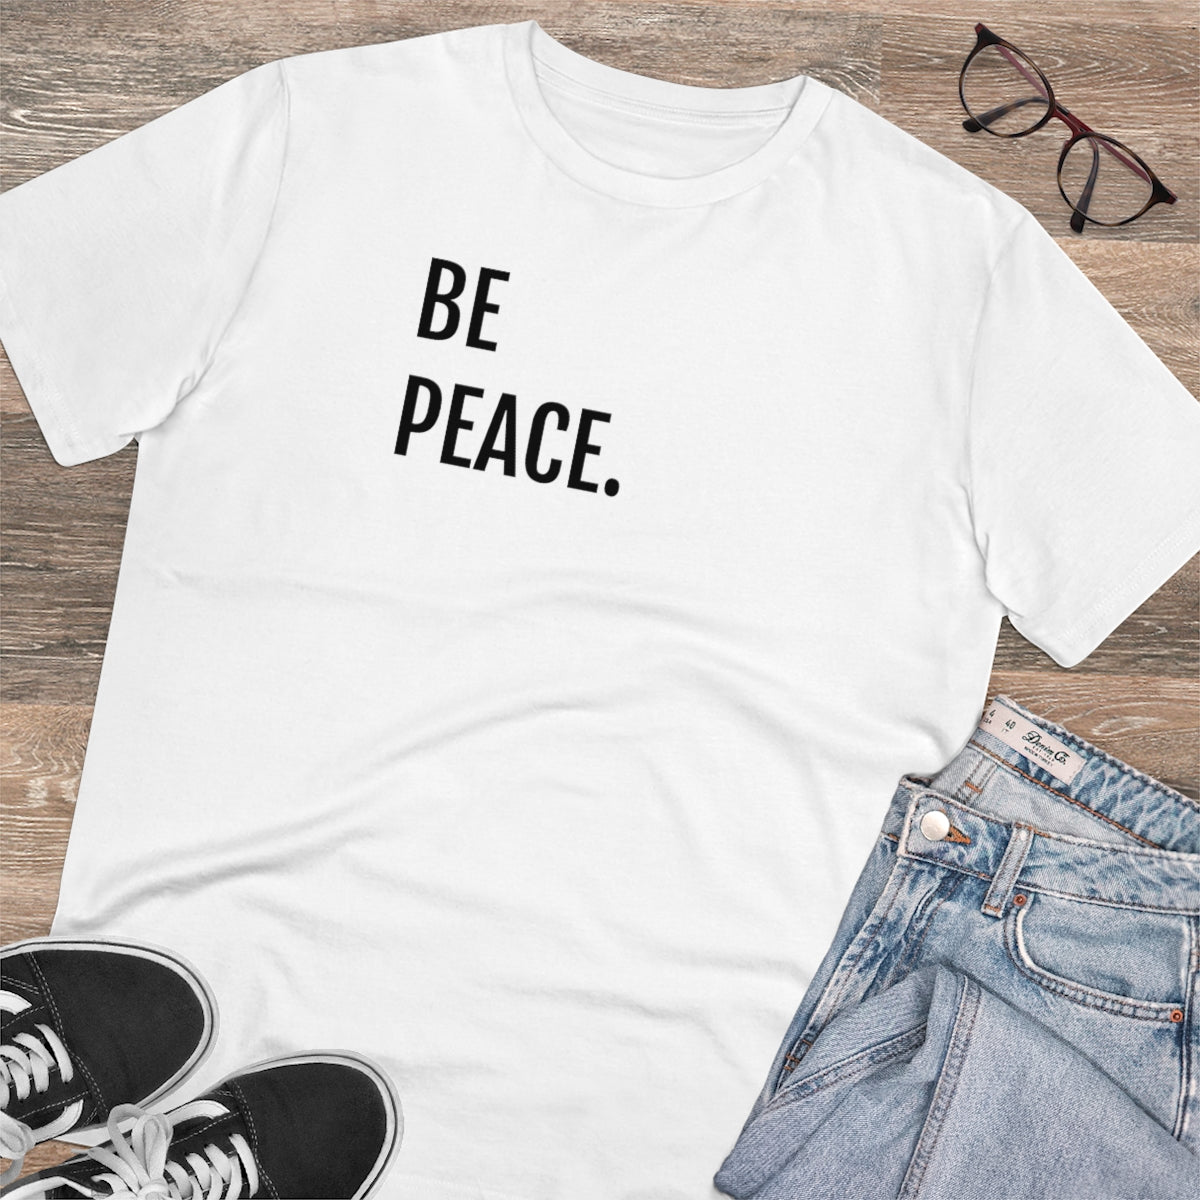 BE PEACE. - Organic Creator T-shirt - Unisex